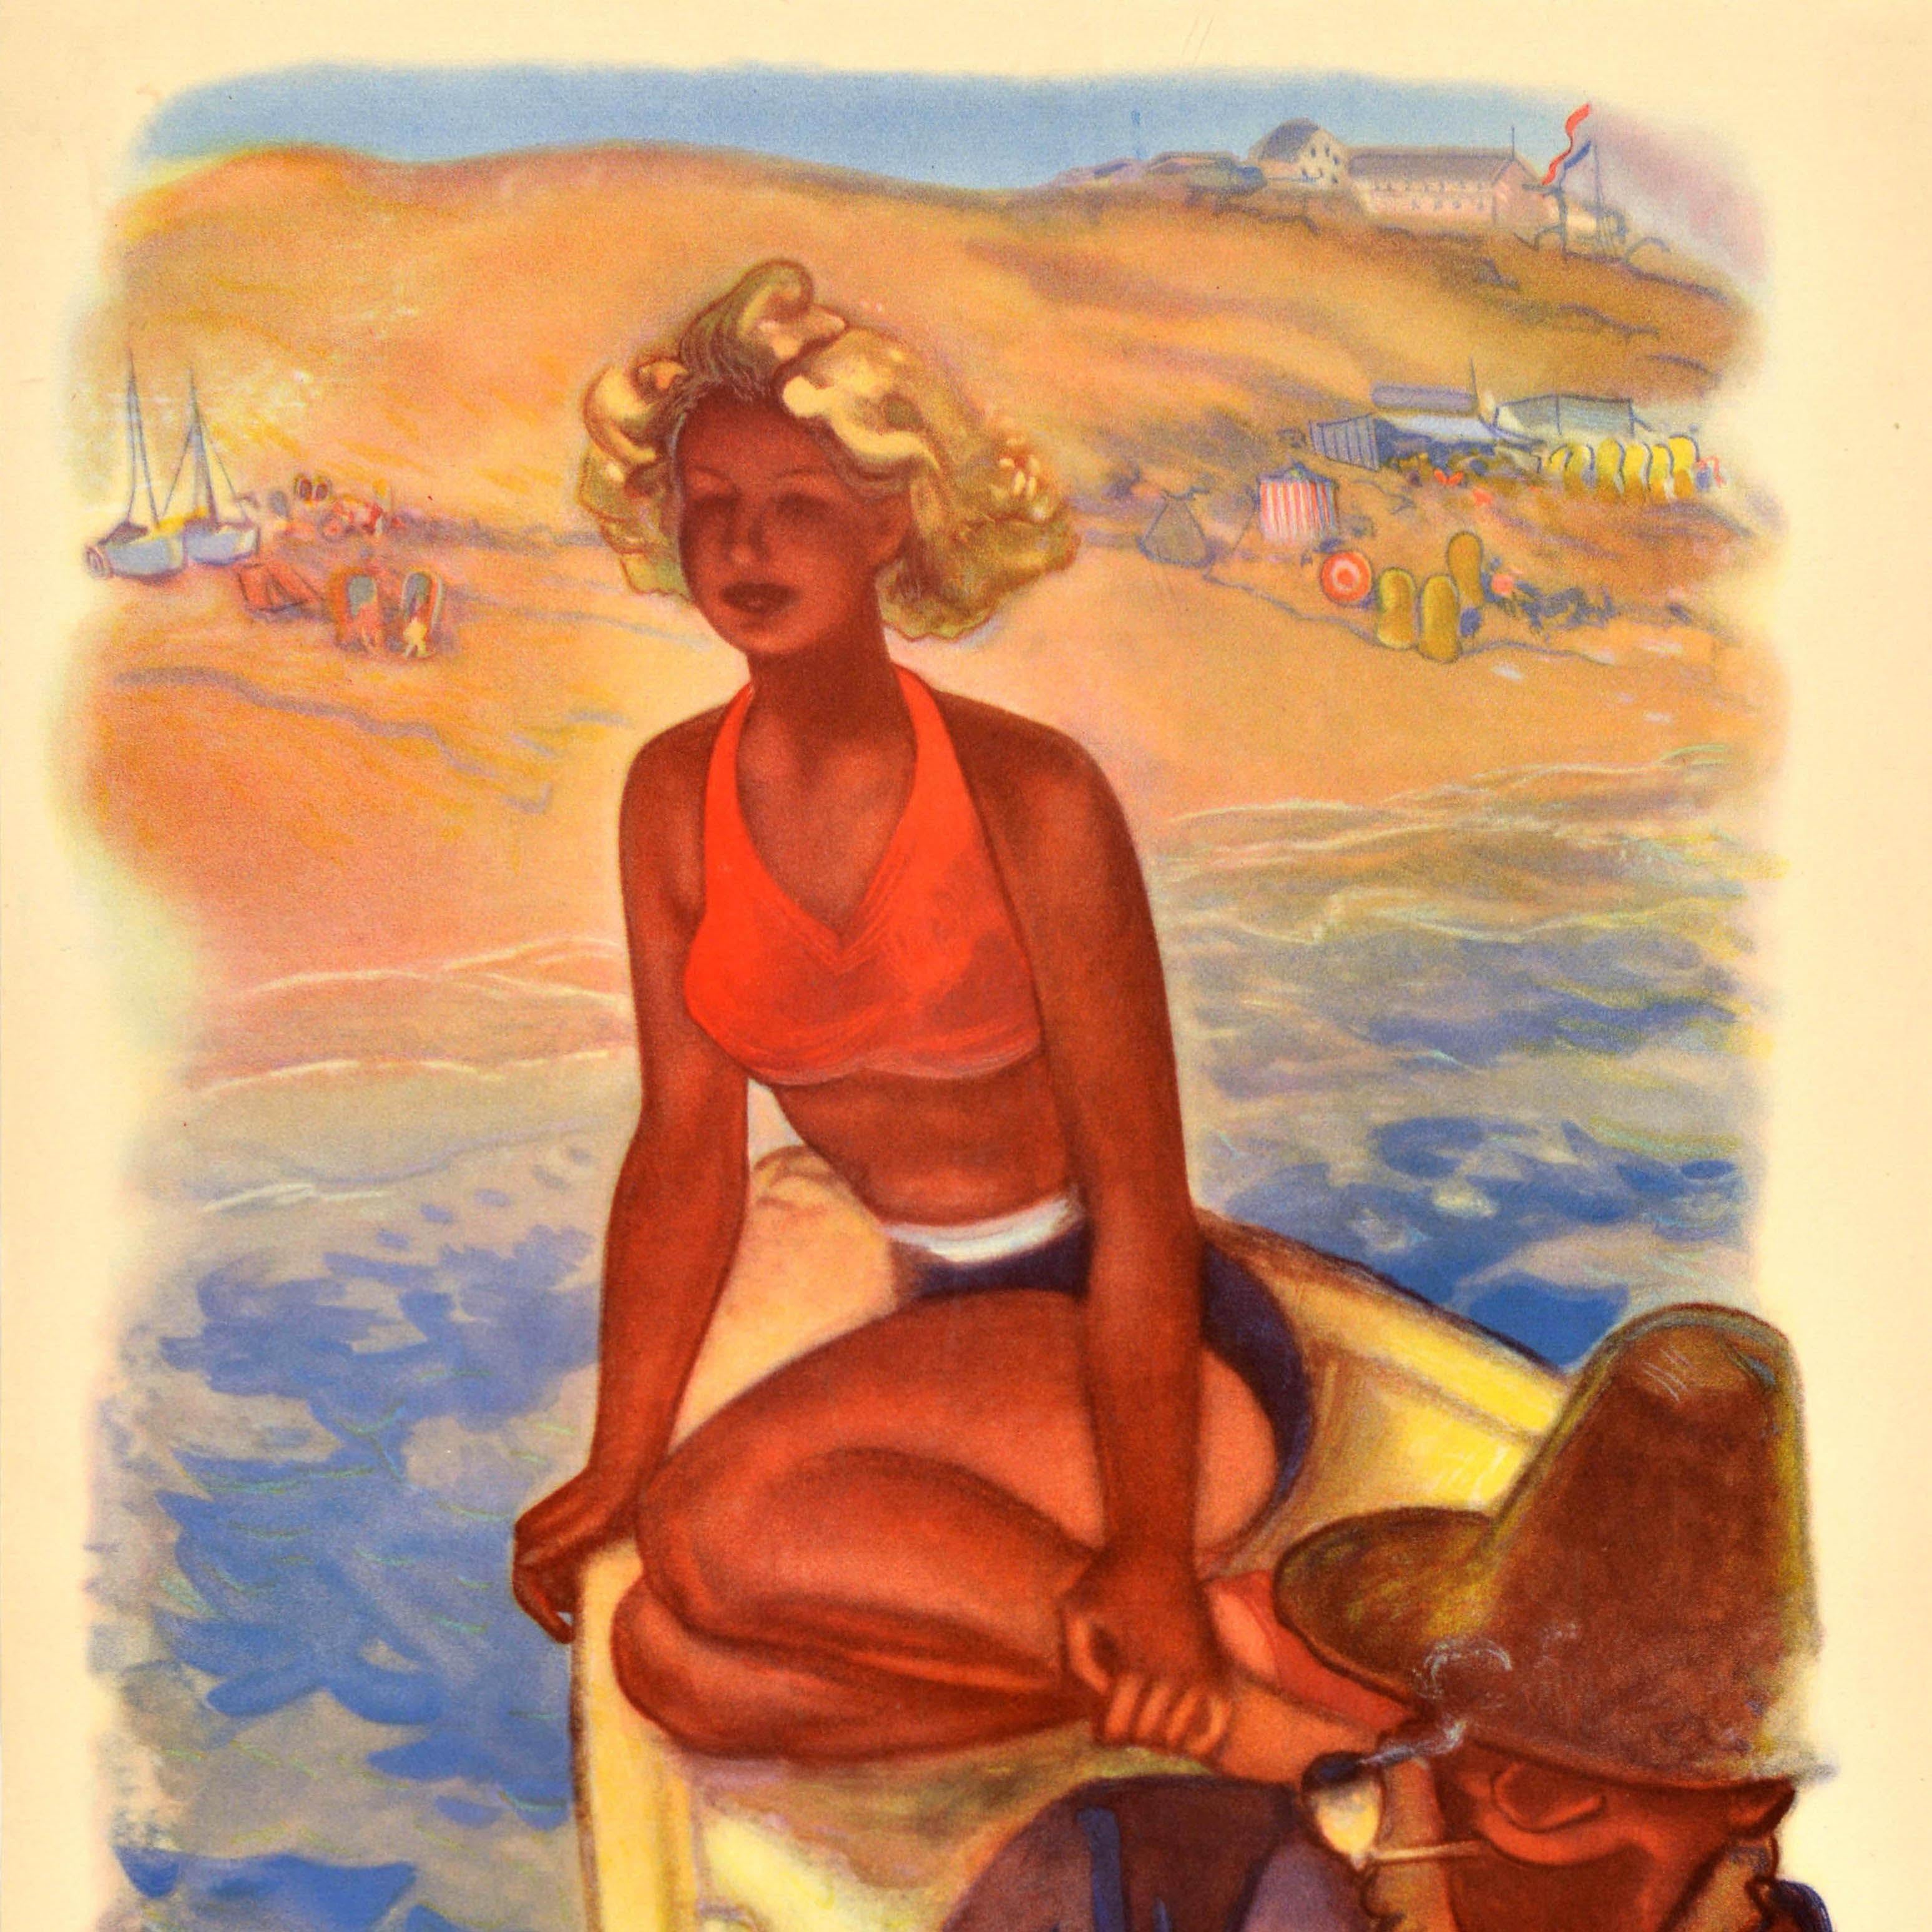 Dutch Original Vintage Travel Poster Holland Beach Fisherman Netherlands Midcentury For Sale